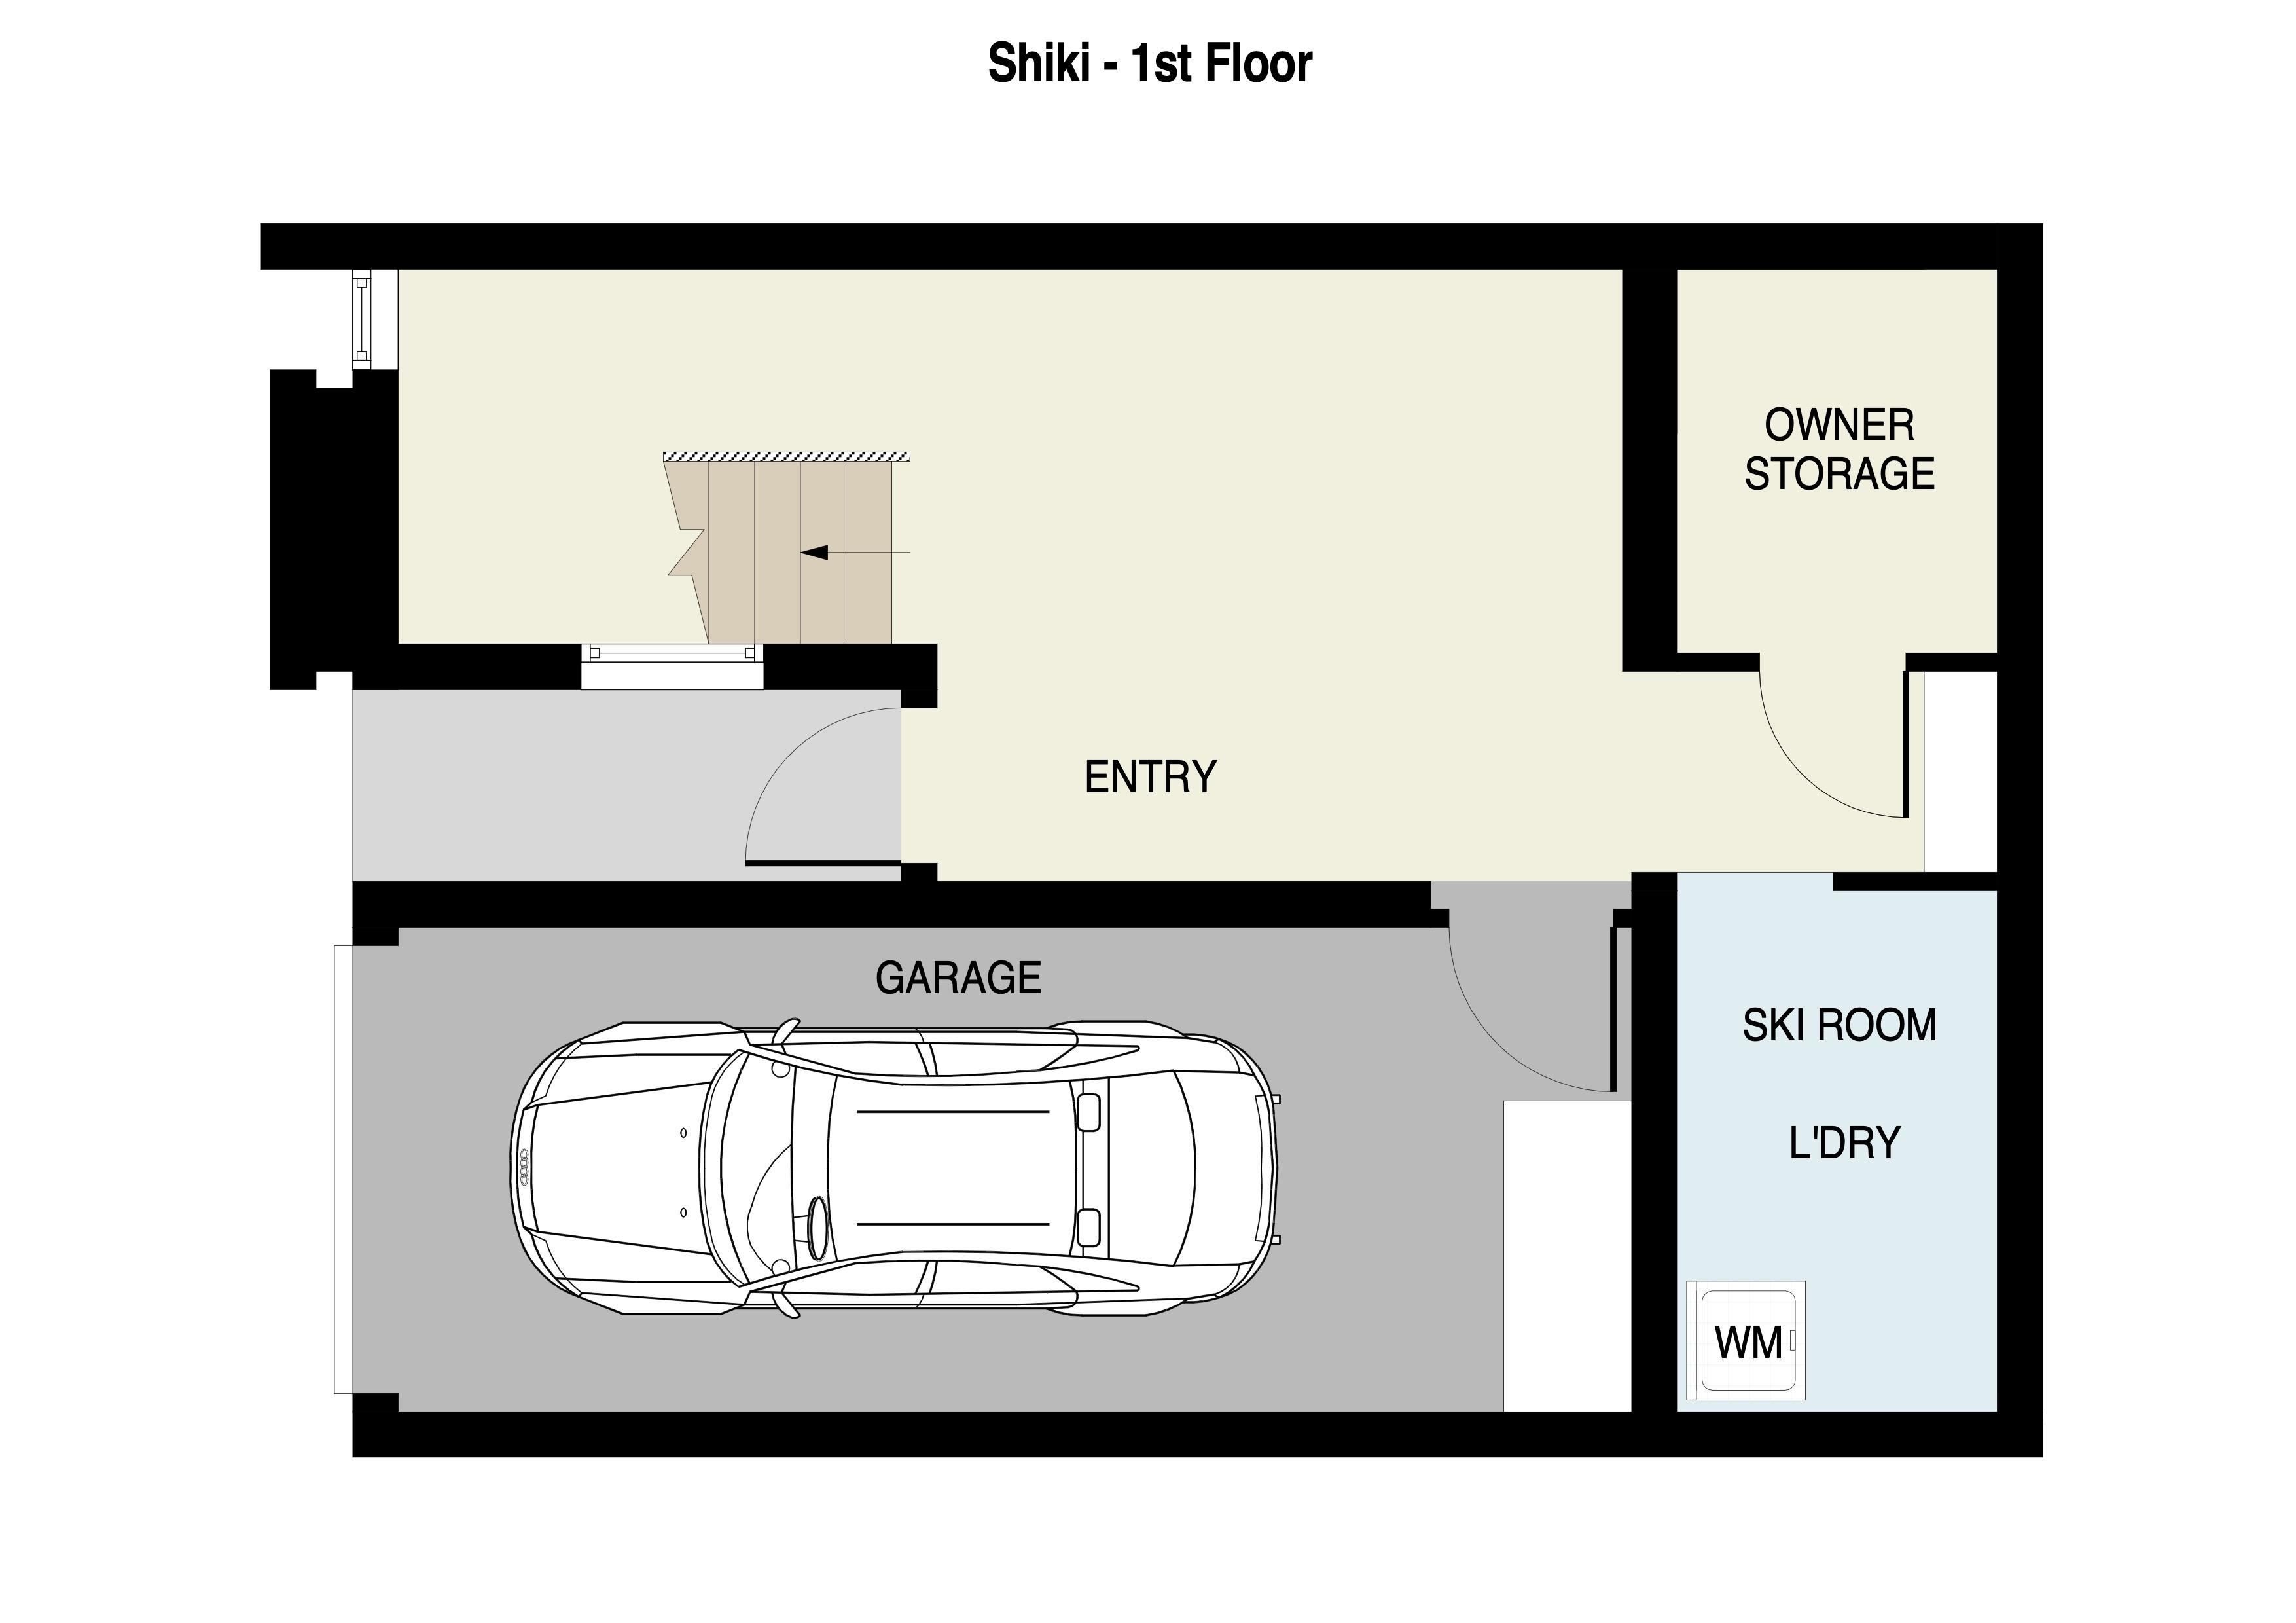 Shiki 1st floor plan